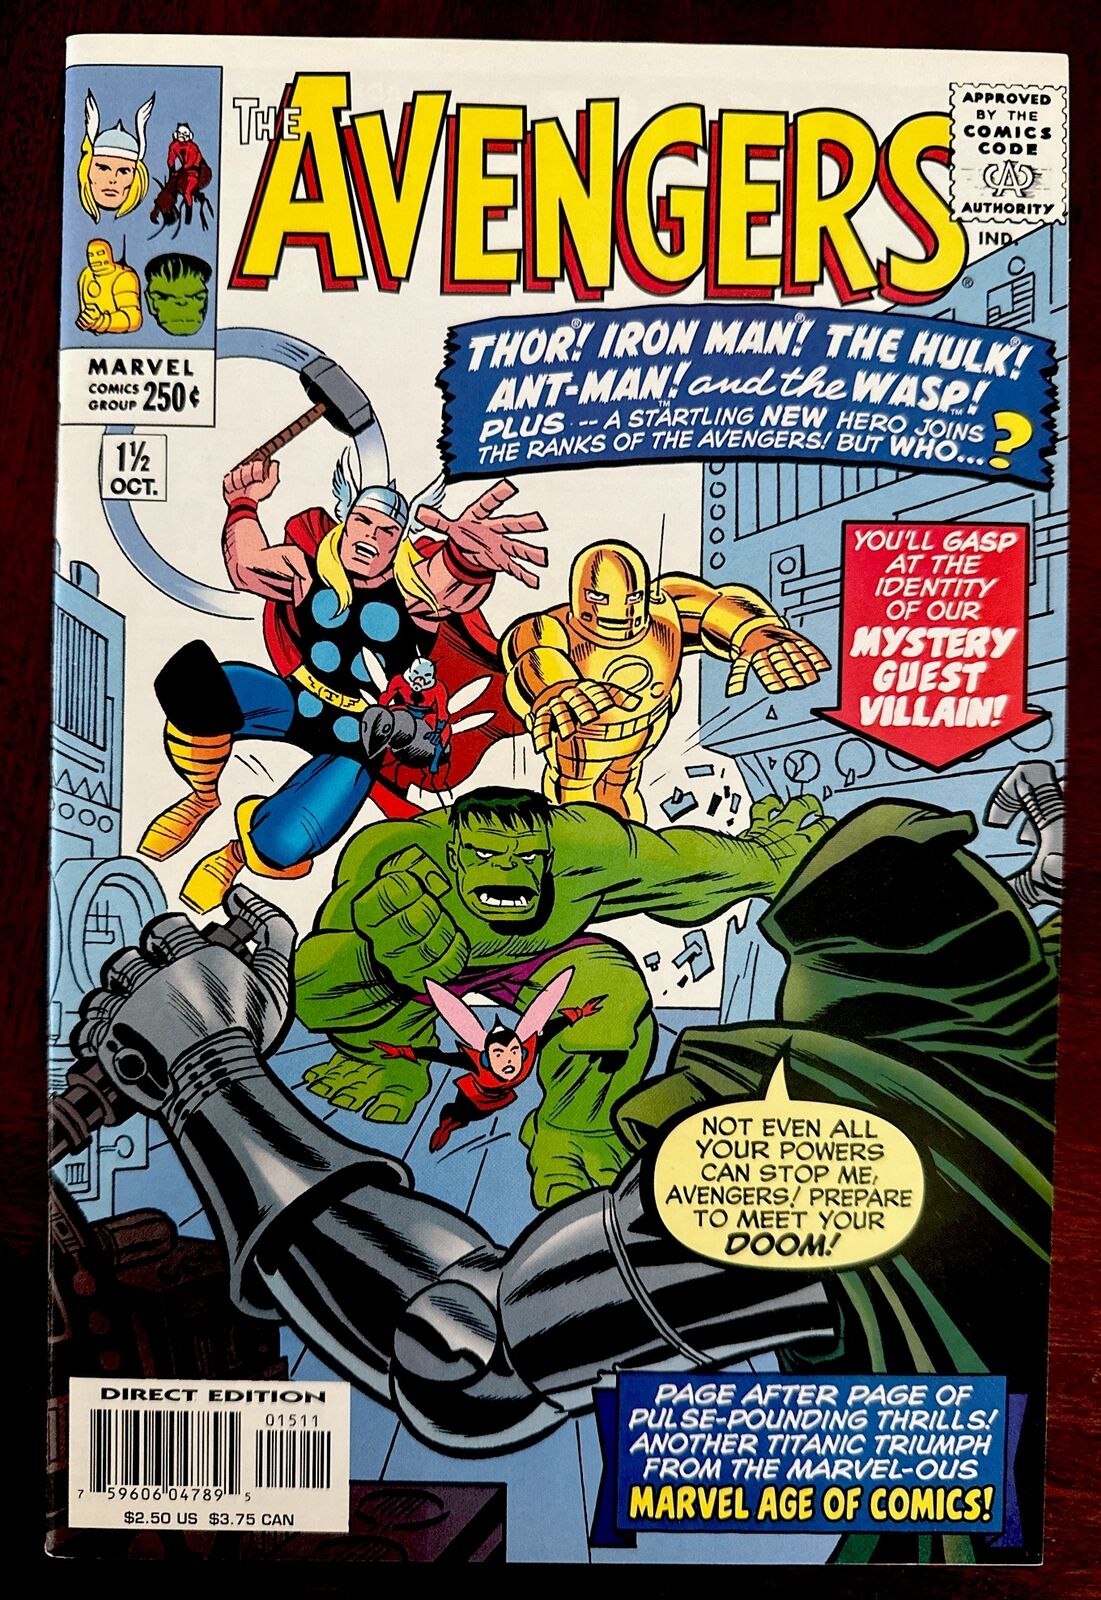 Avengers # 1 1/2  (1999) Marvel - Bruce Timm cover - 1.5 - 1-1/2 - half issue